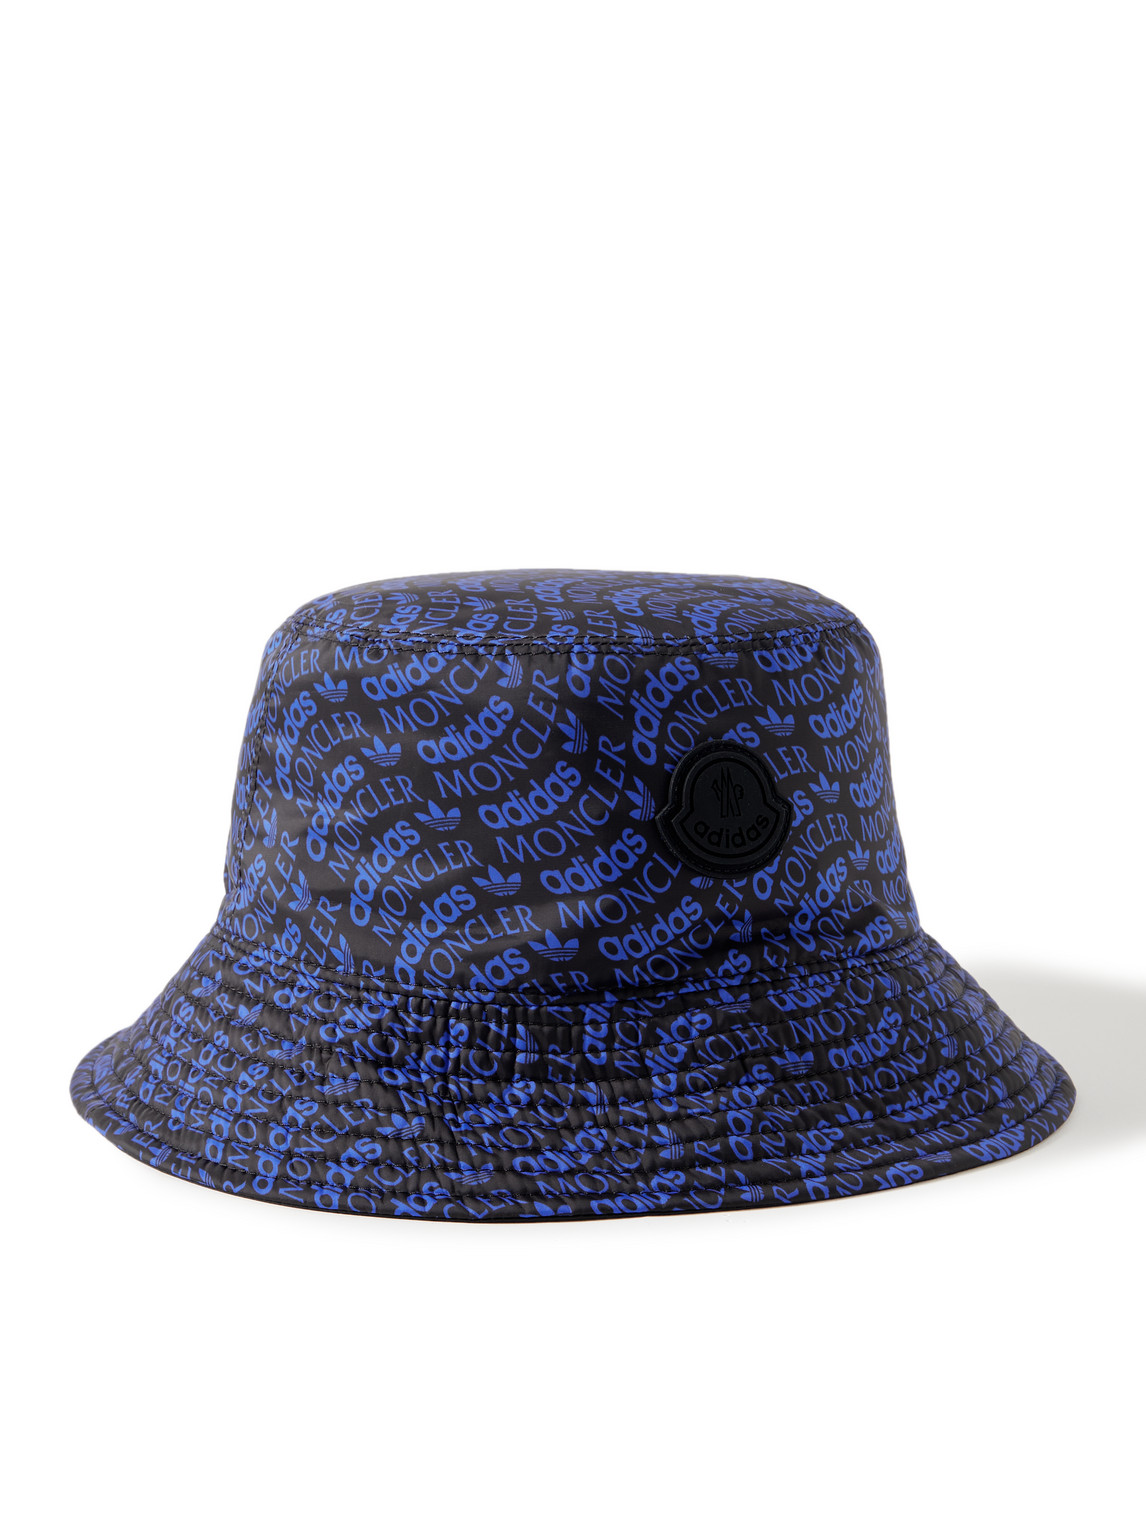 Moncler Genius Moncler X Adidas Tech Bucket Hat In Black,blue